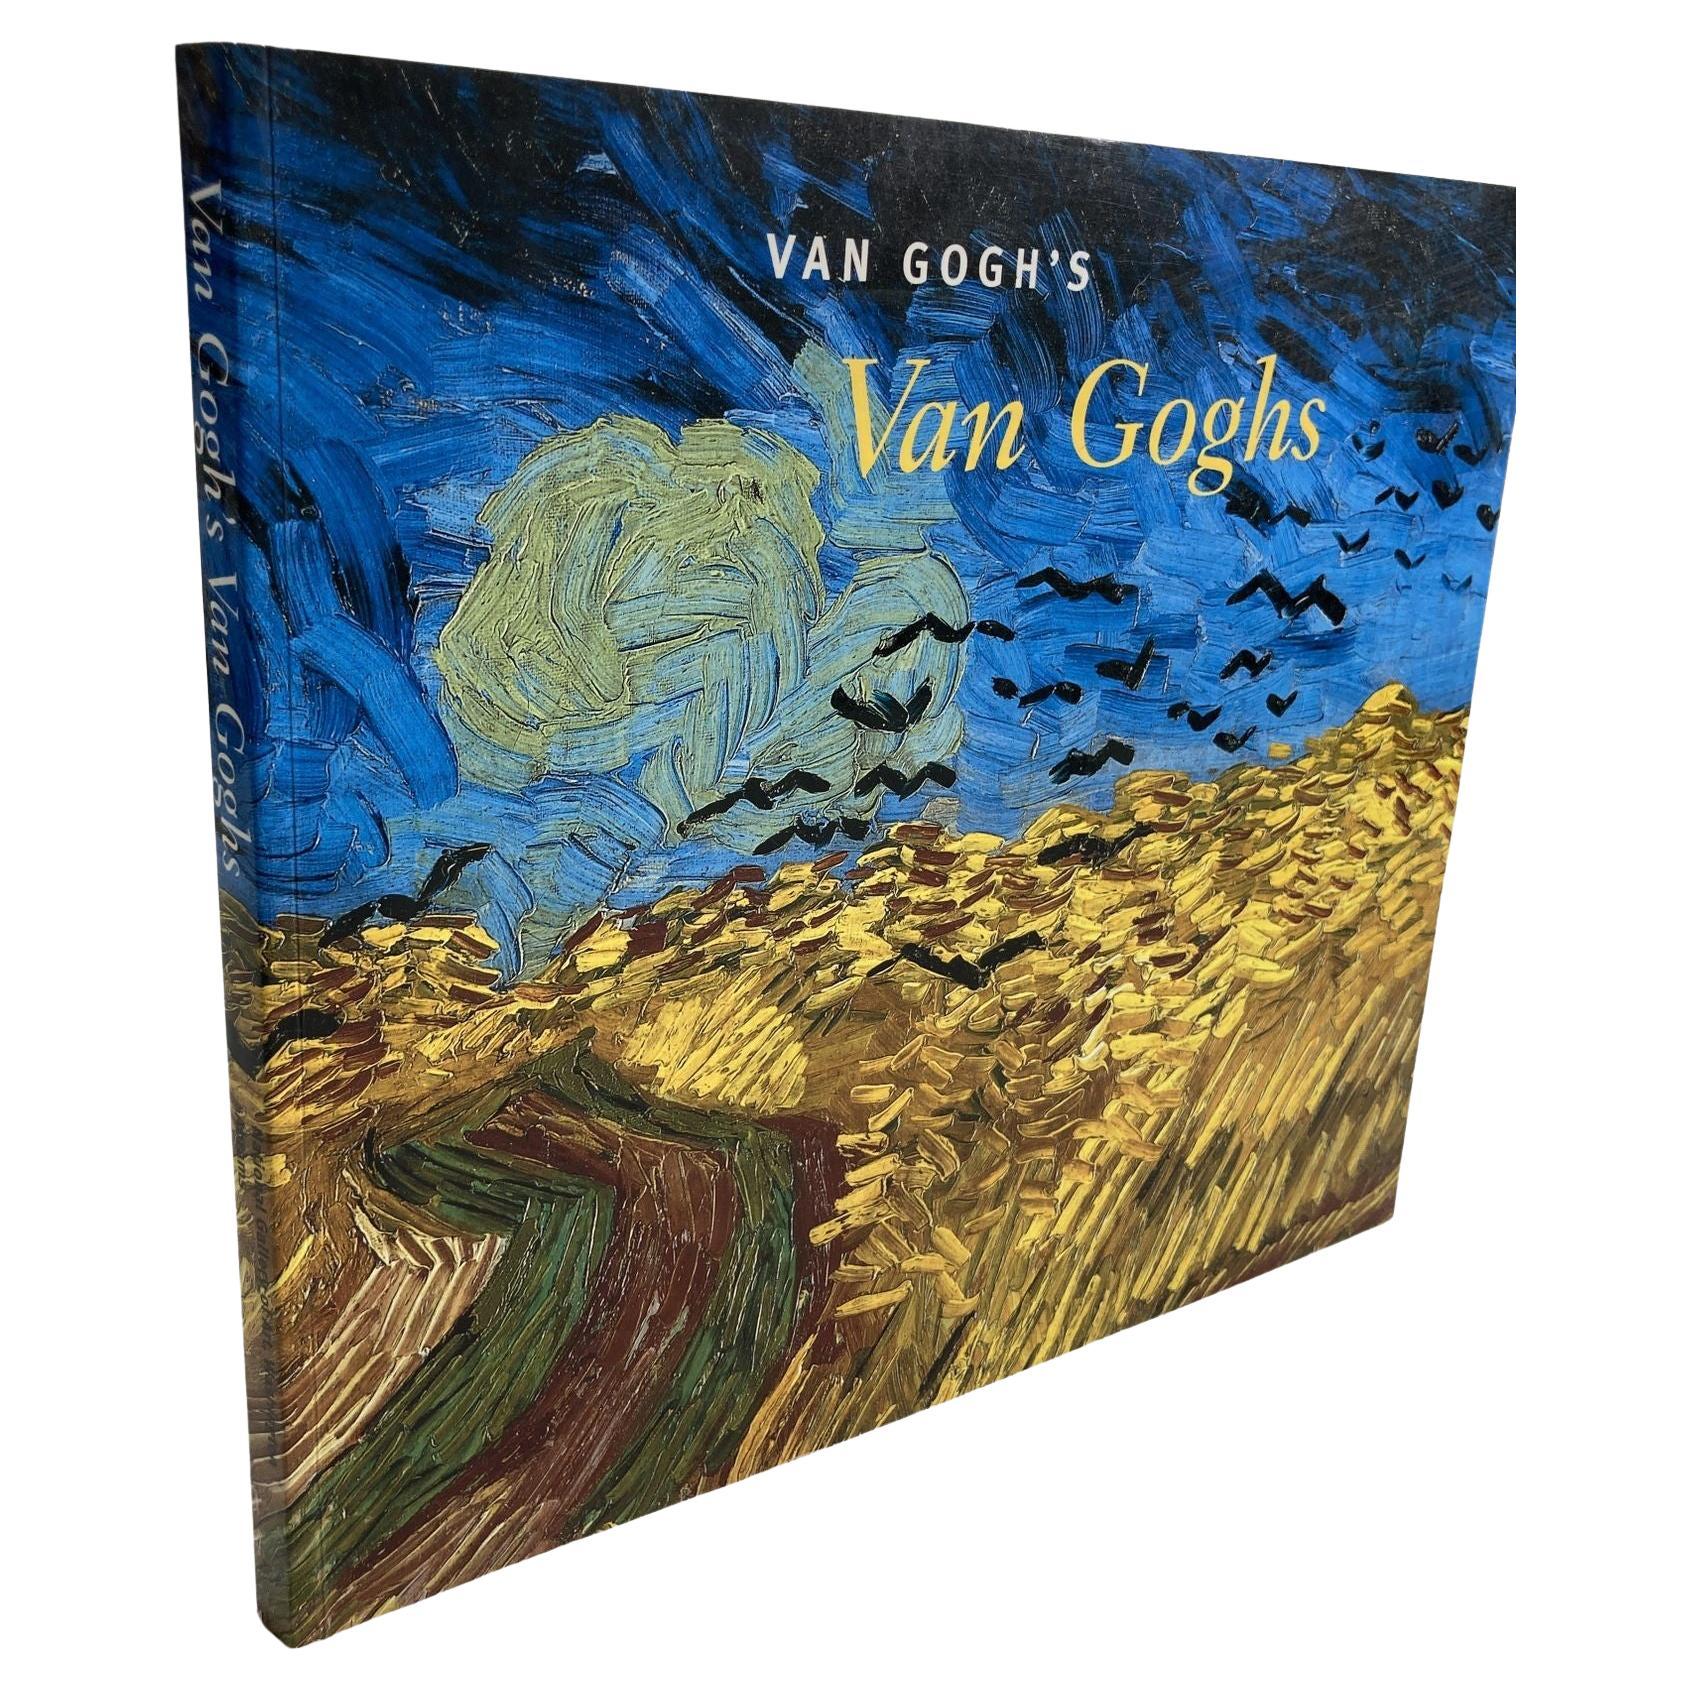 Van Gogh's Van Goghs: Masterpieces from the Van Gogh Museum, Amsterdam Book For Sale